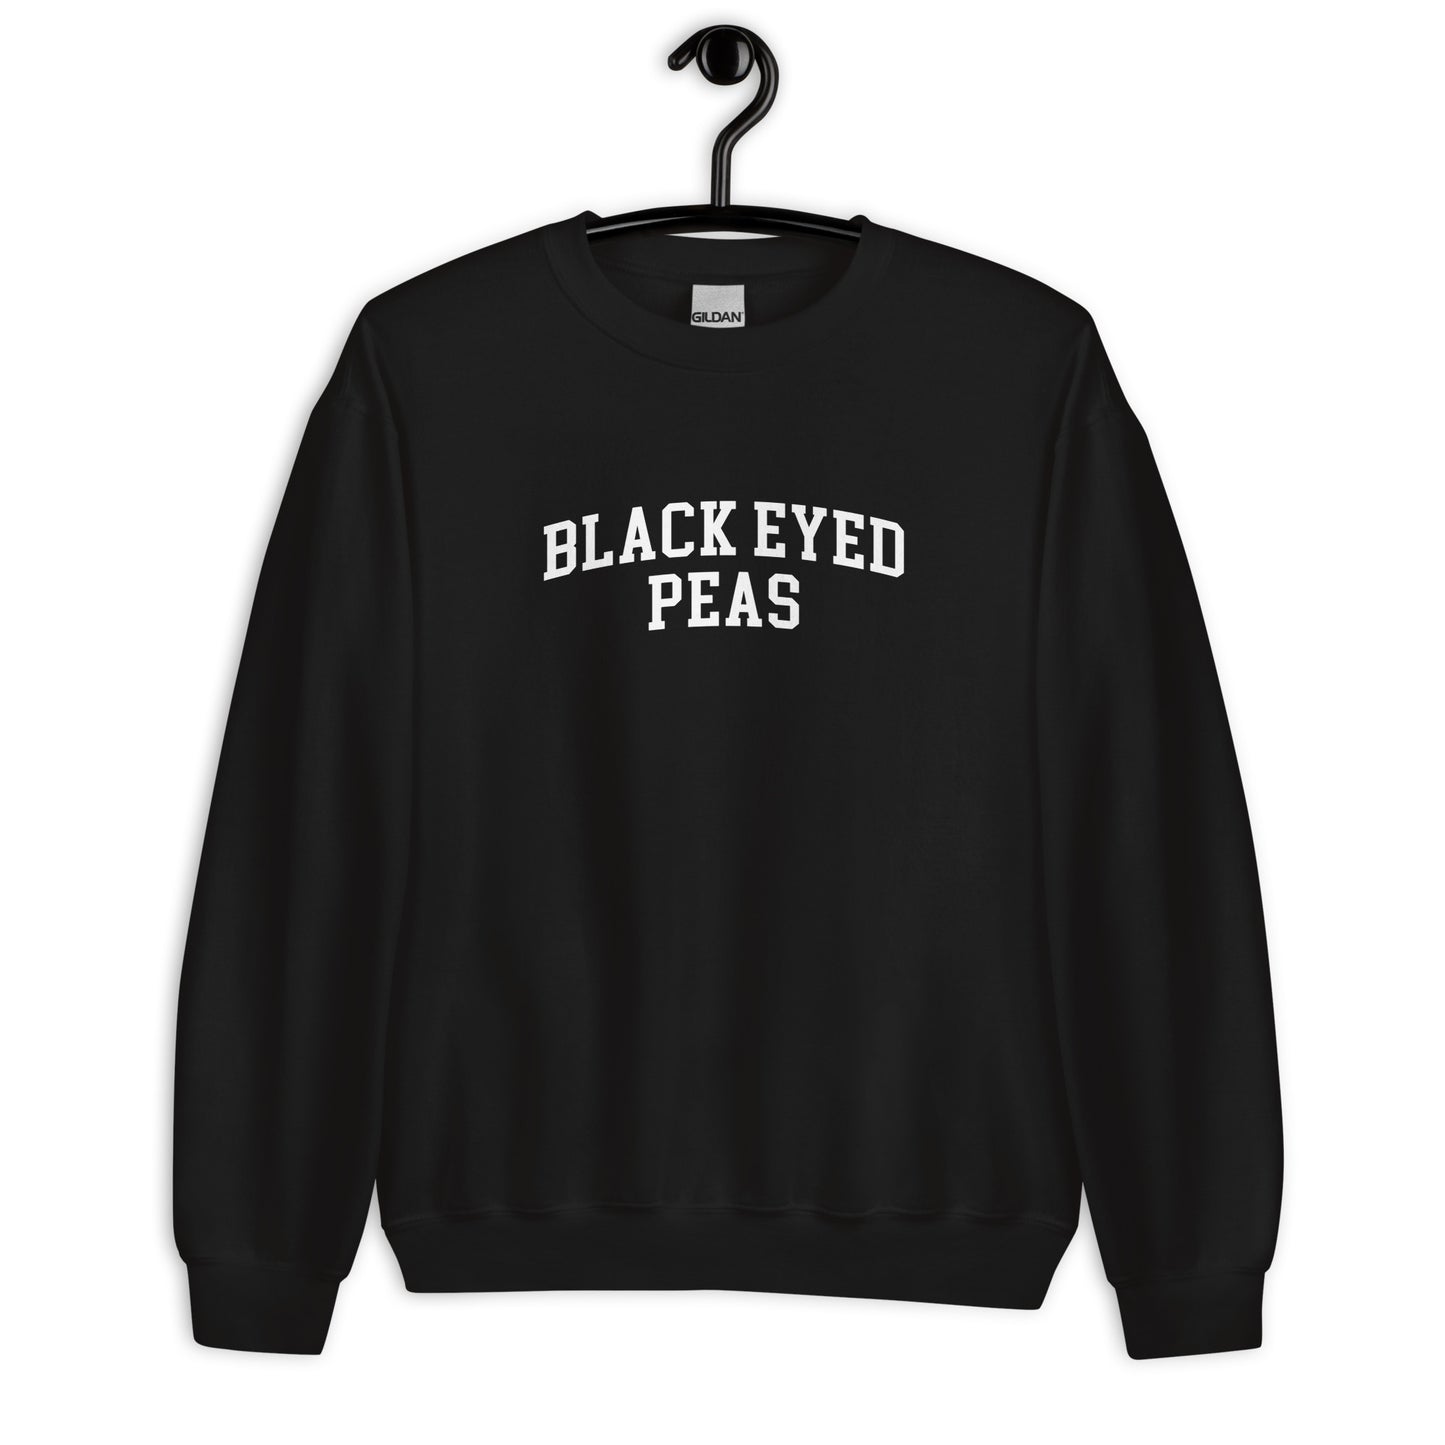 Black Eyed Peas Sweatshirt - Arched Font